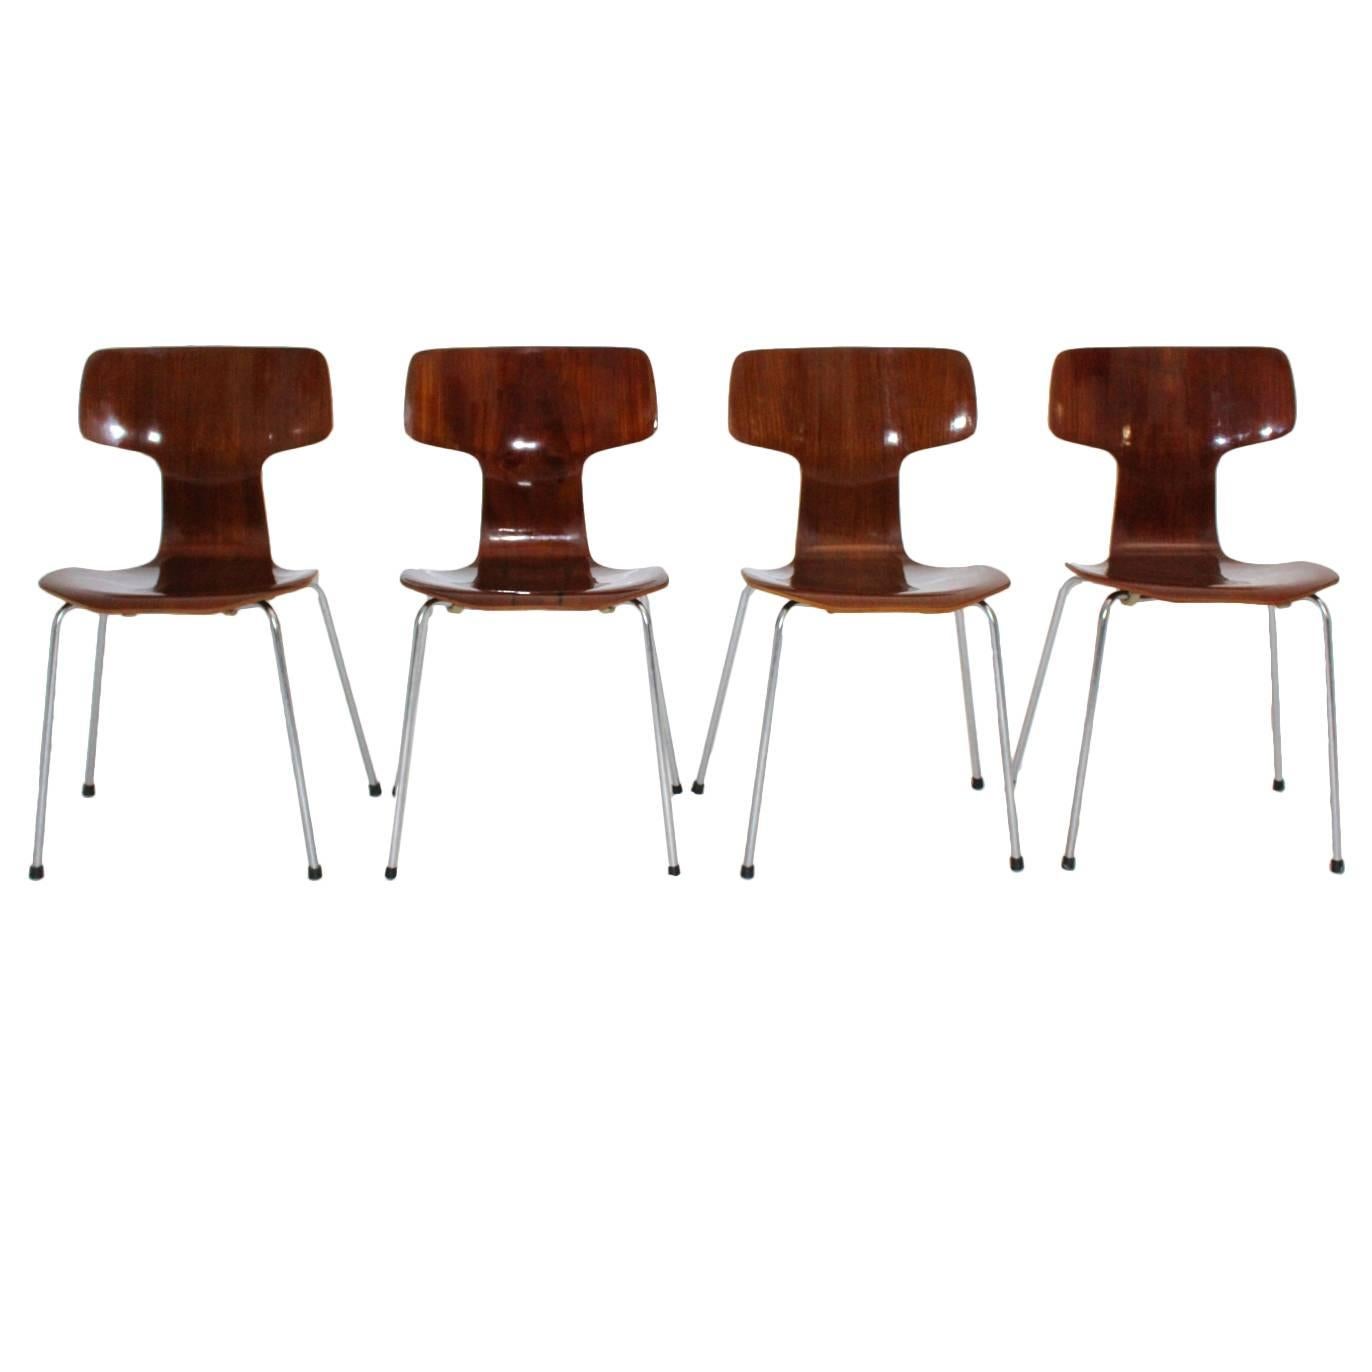 Mid Century Modern Vintage Teak Chairs by Arne JacobsenDenmark for Fritz Hansen 